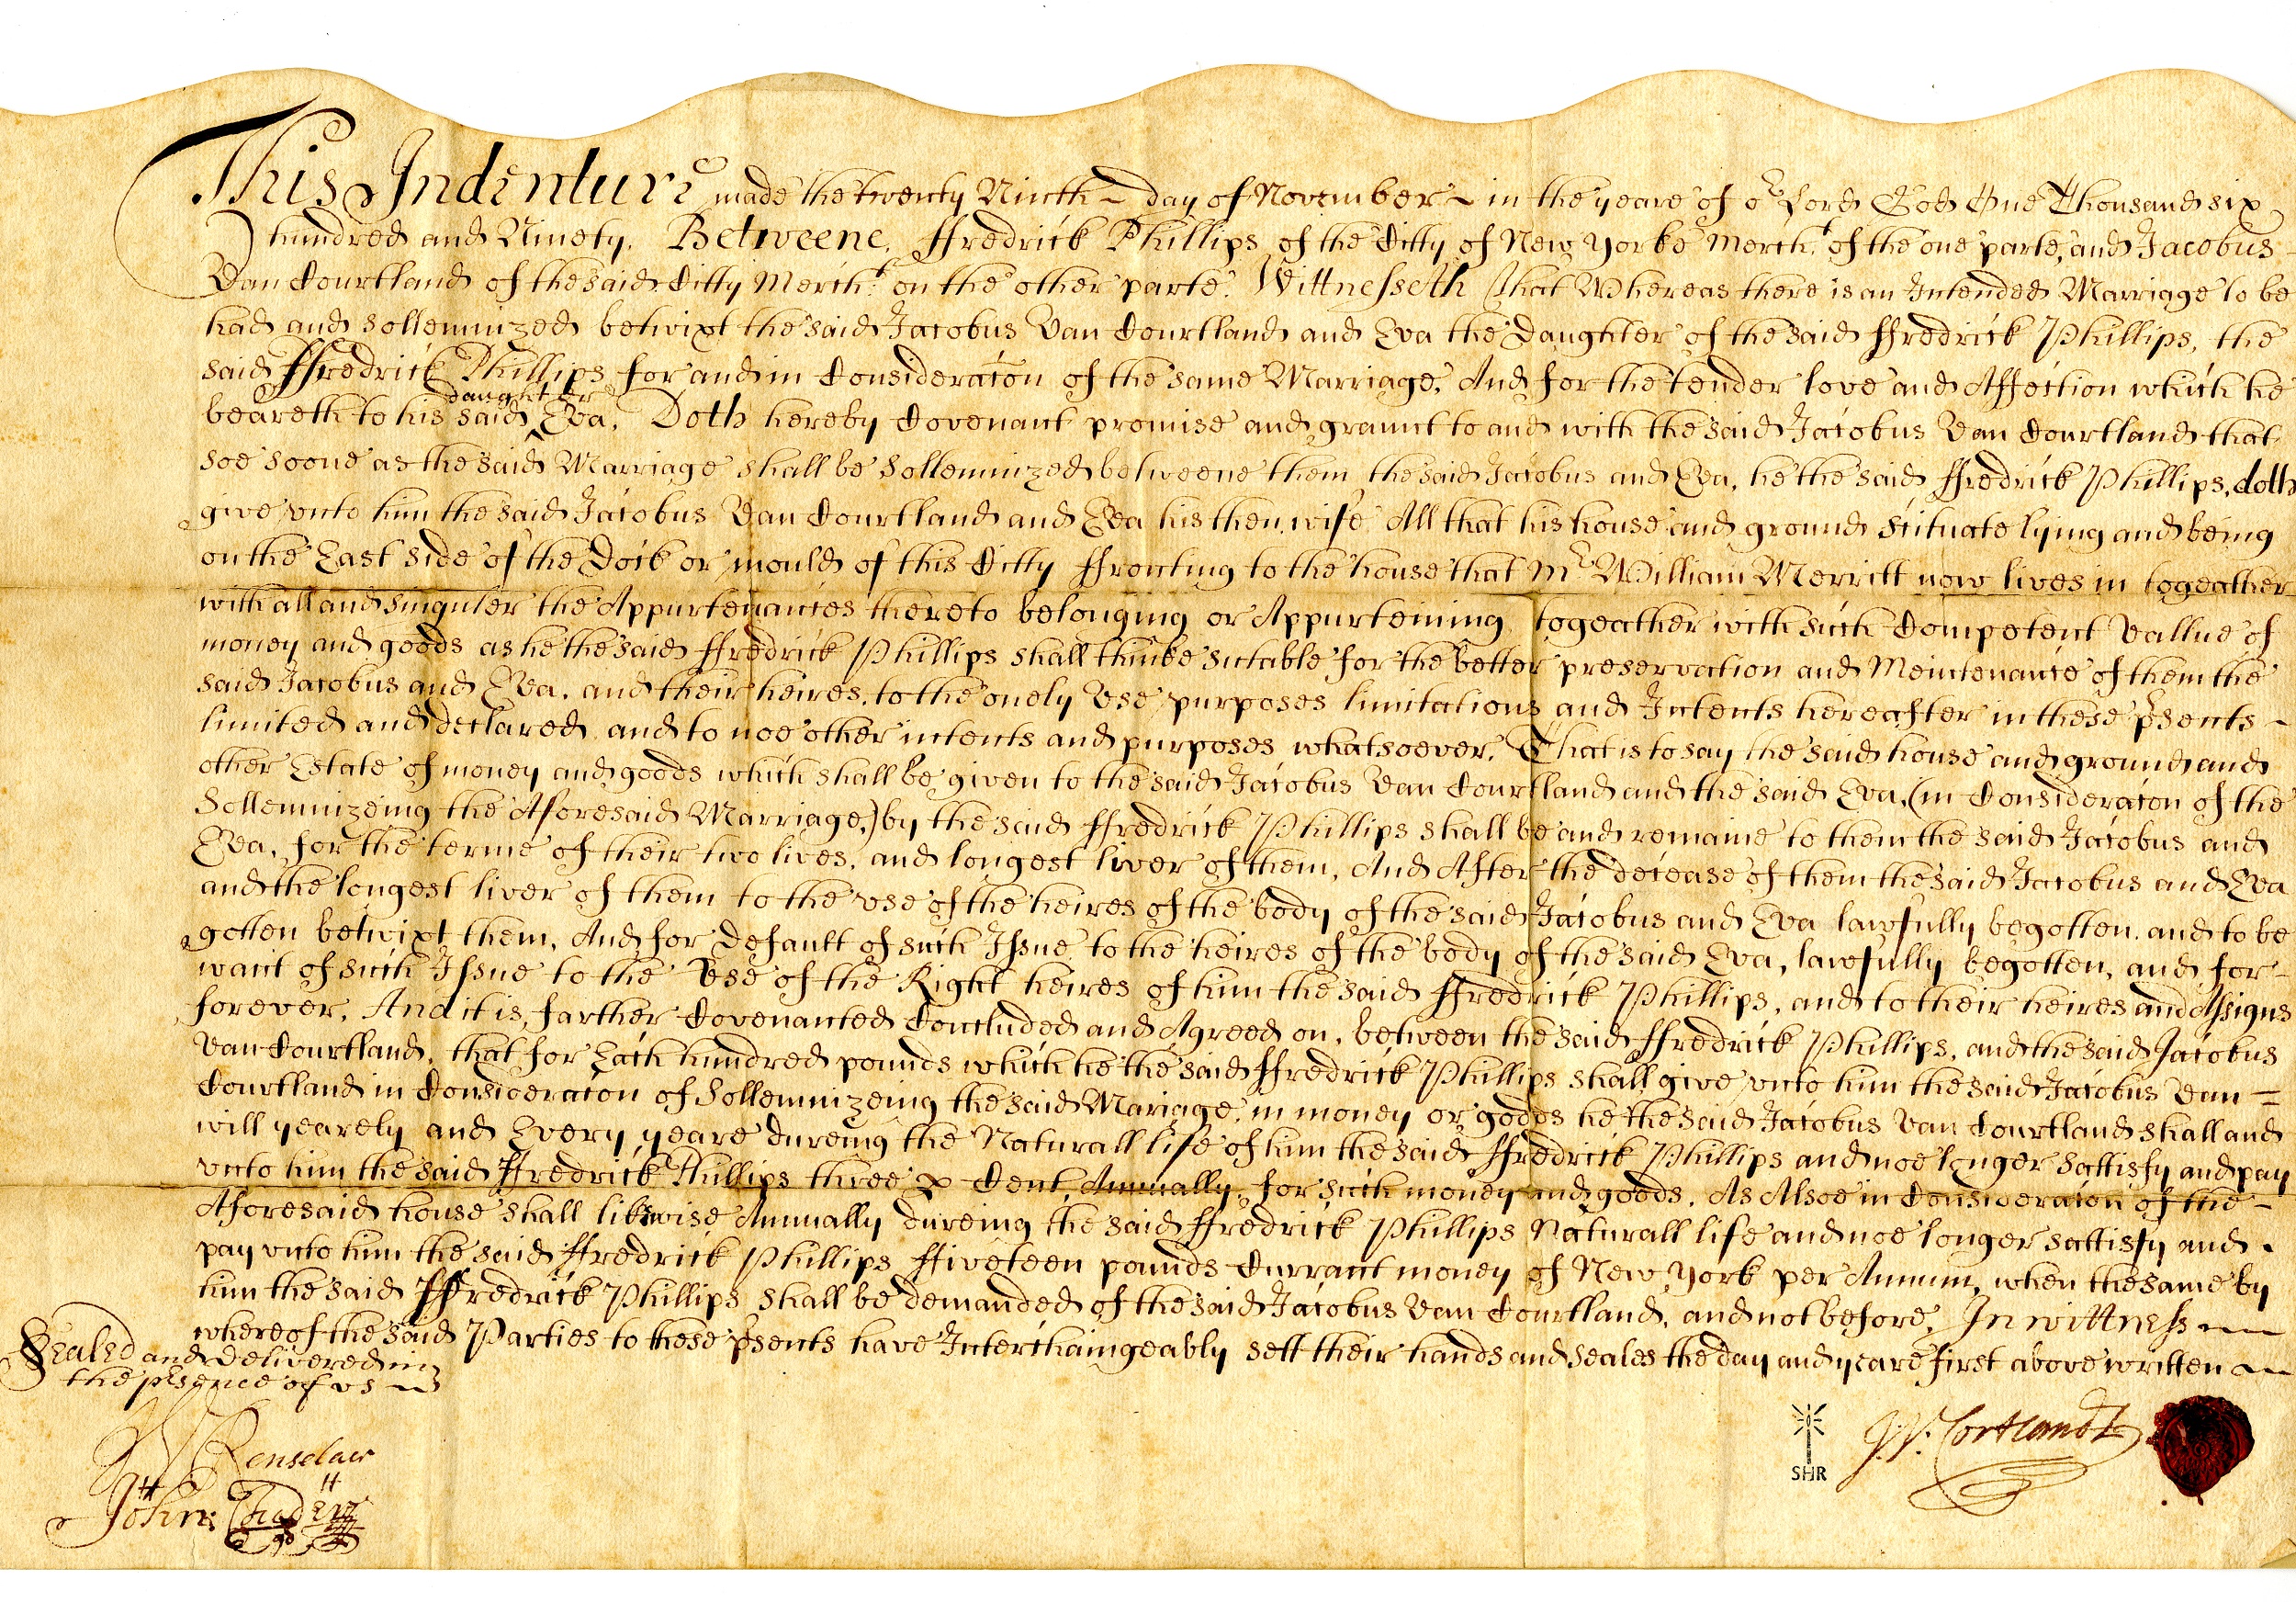 Property Agreement upon the Marriage of Eva Philipse to Jacobus Van Cortlandt (1690), P 251.